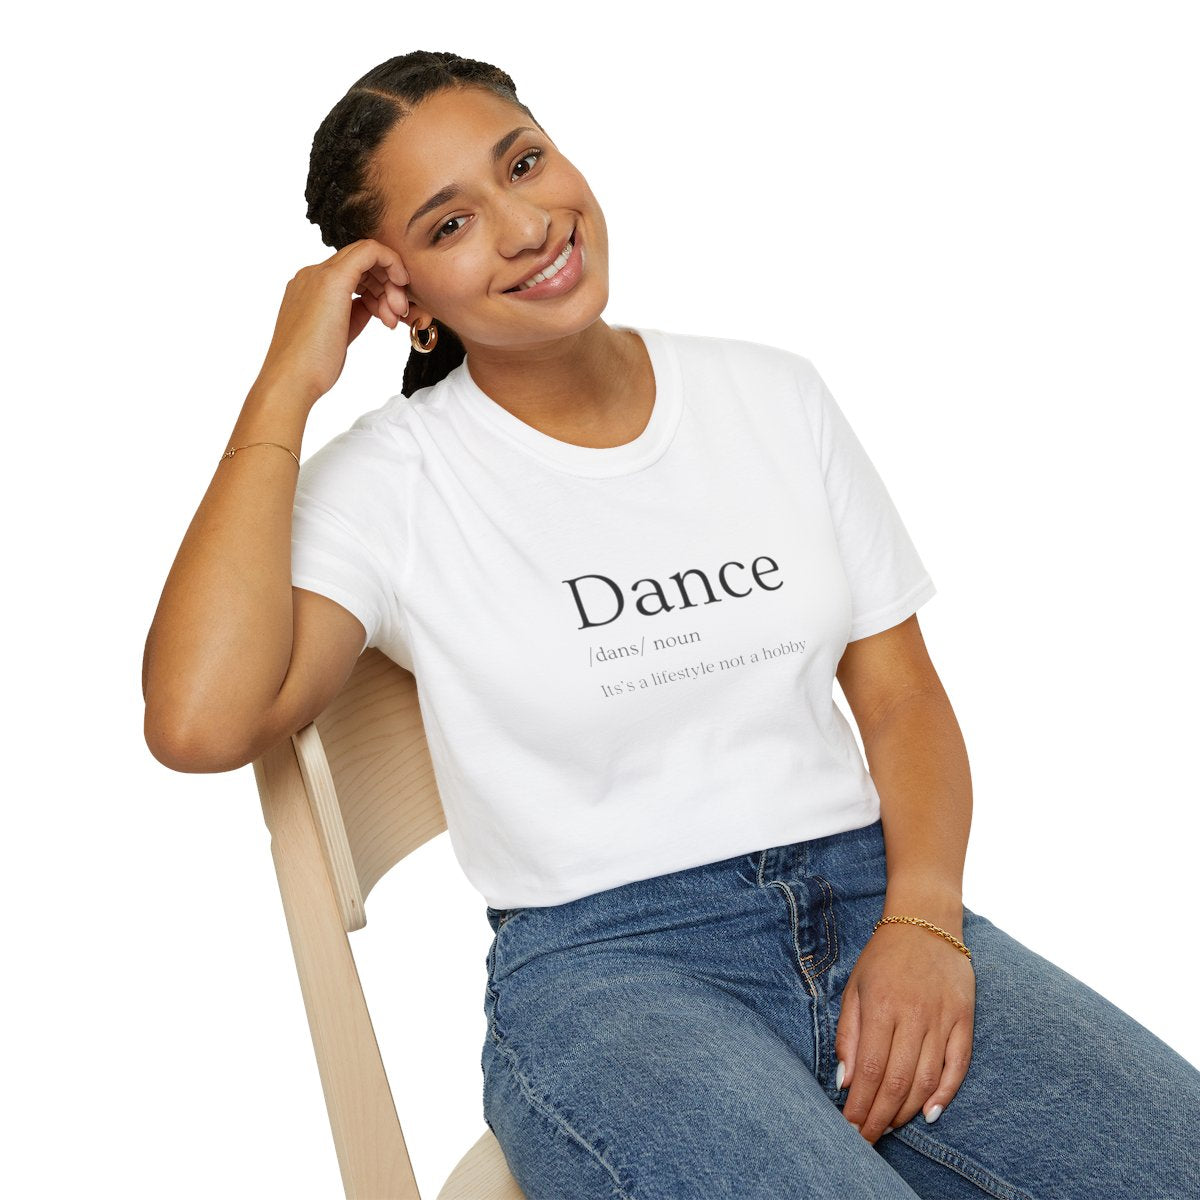 Dance Definition T-shirt